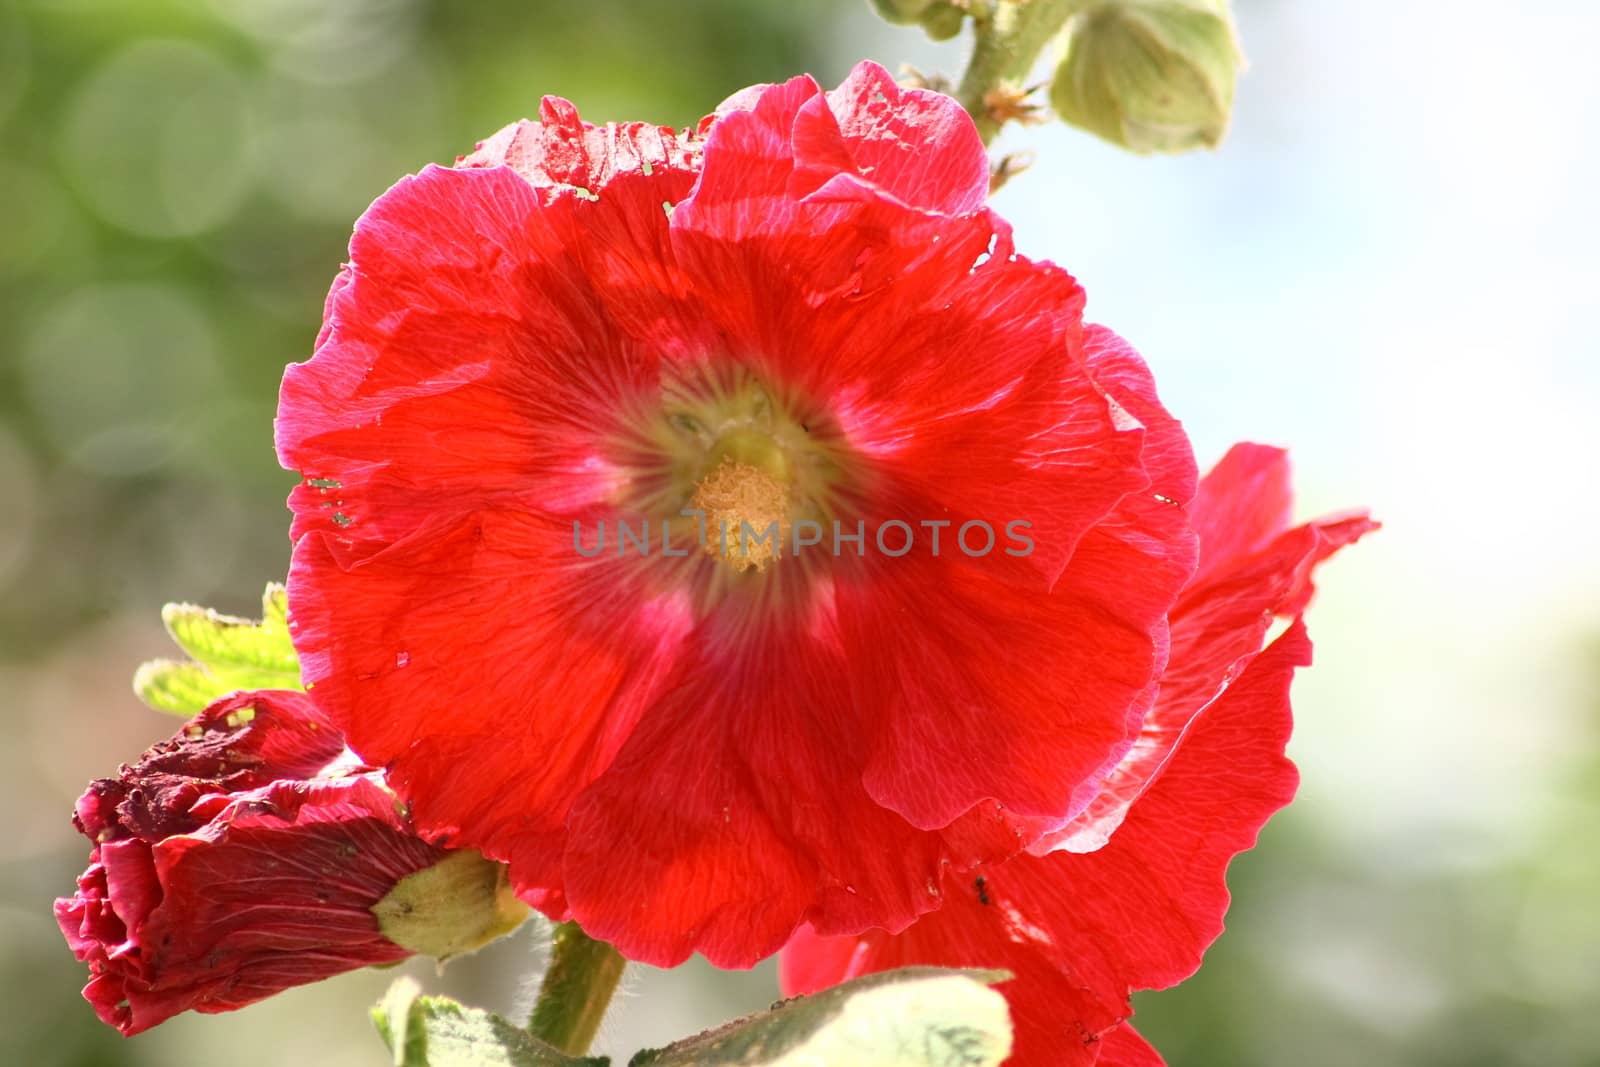 A beautiful blooming red hollyhock (Alcea rosea)